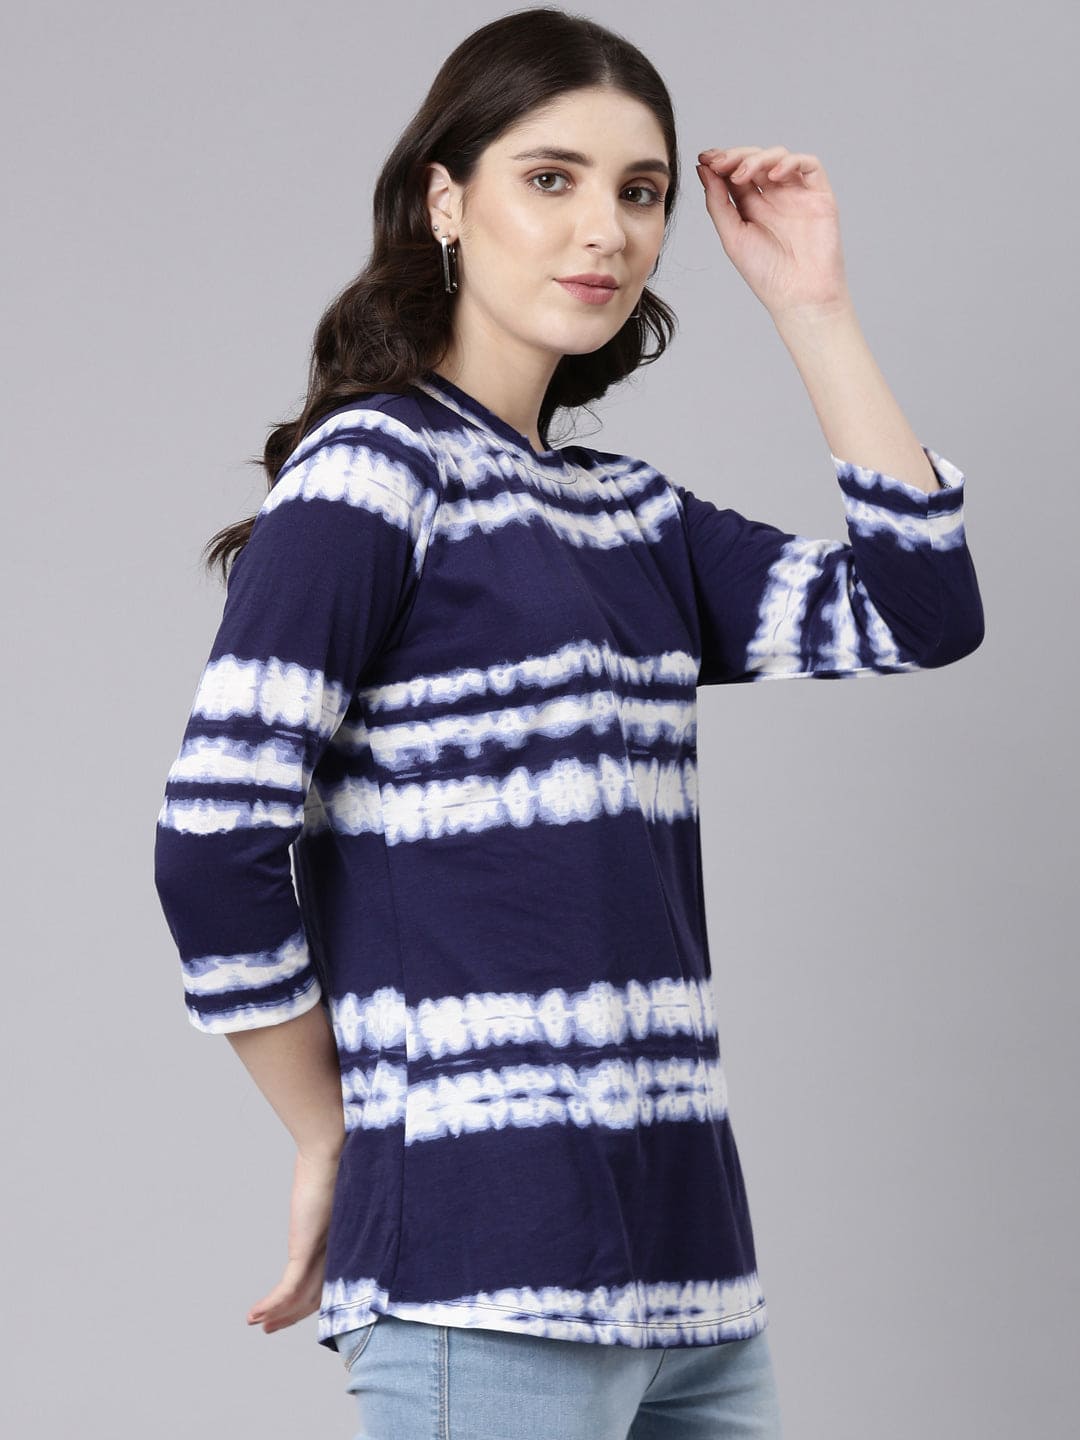 Buy TheShaili  Tie & Dye t-shirt Fashionable plus size outfit online